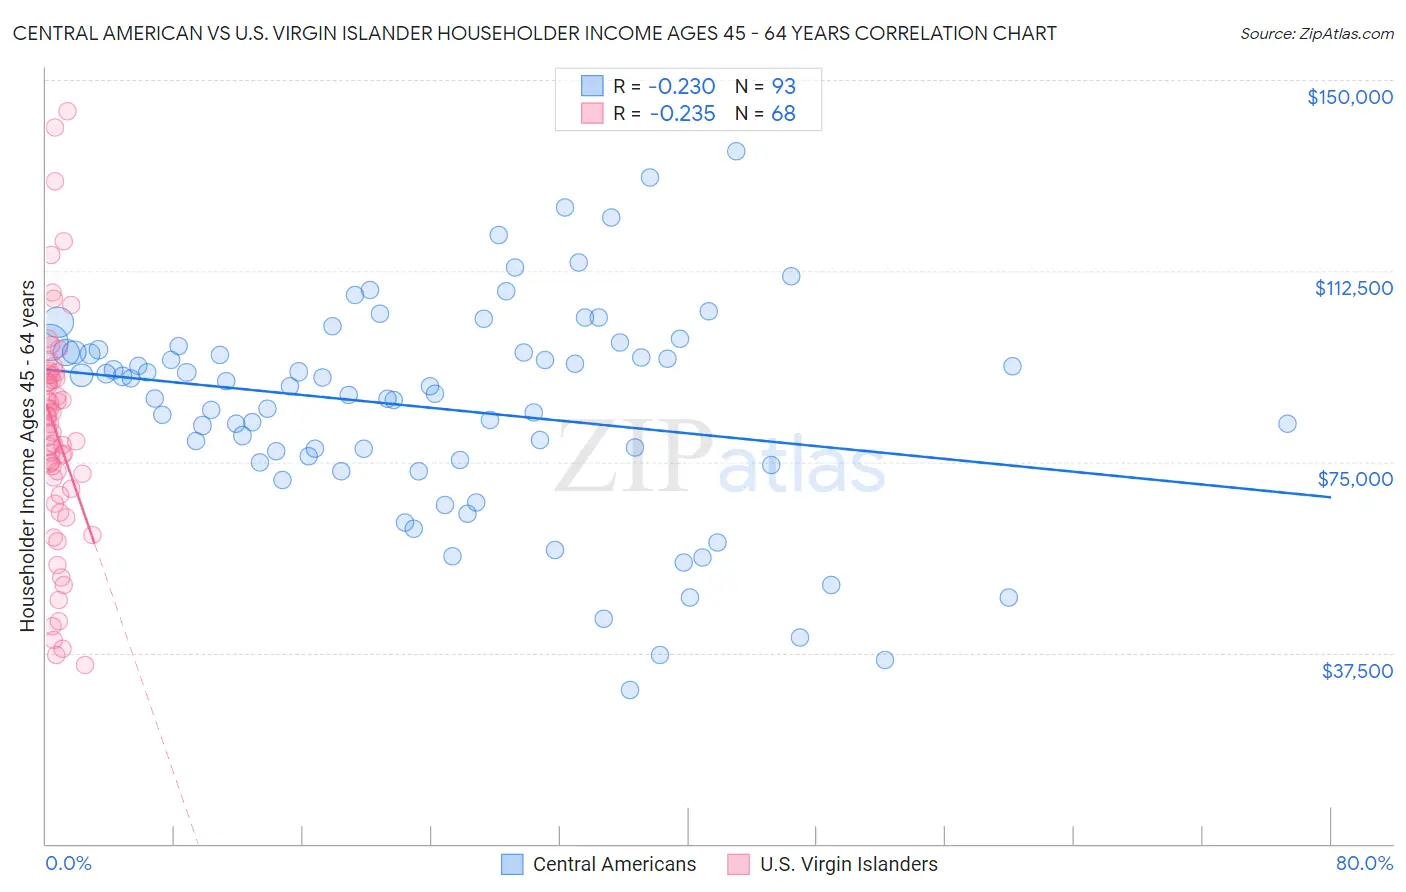 Central American vs U.S. Virgin Islander Householder Income Ages 45 - 64 years